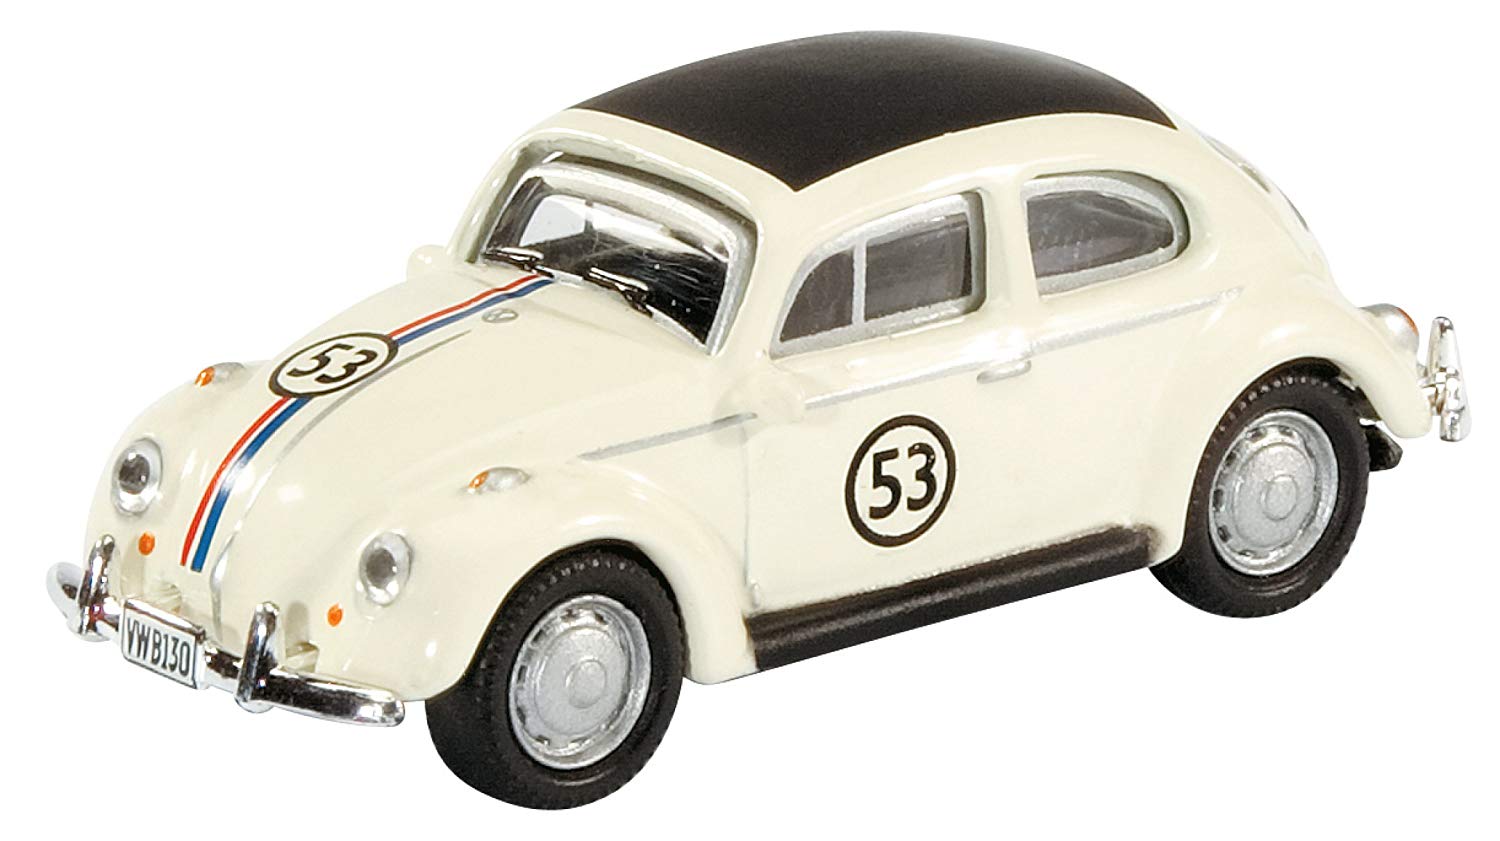 Schuco Schu21888 Model Car Vw Beetle Rally N°53 1:87 Scale